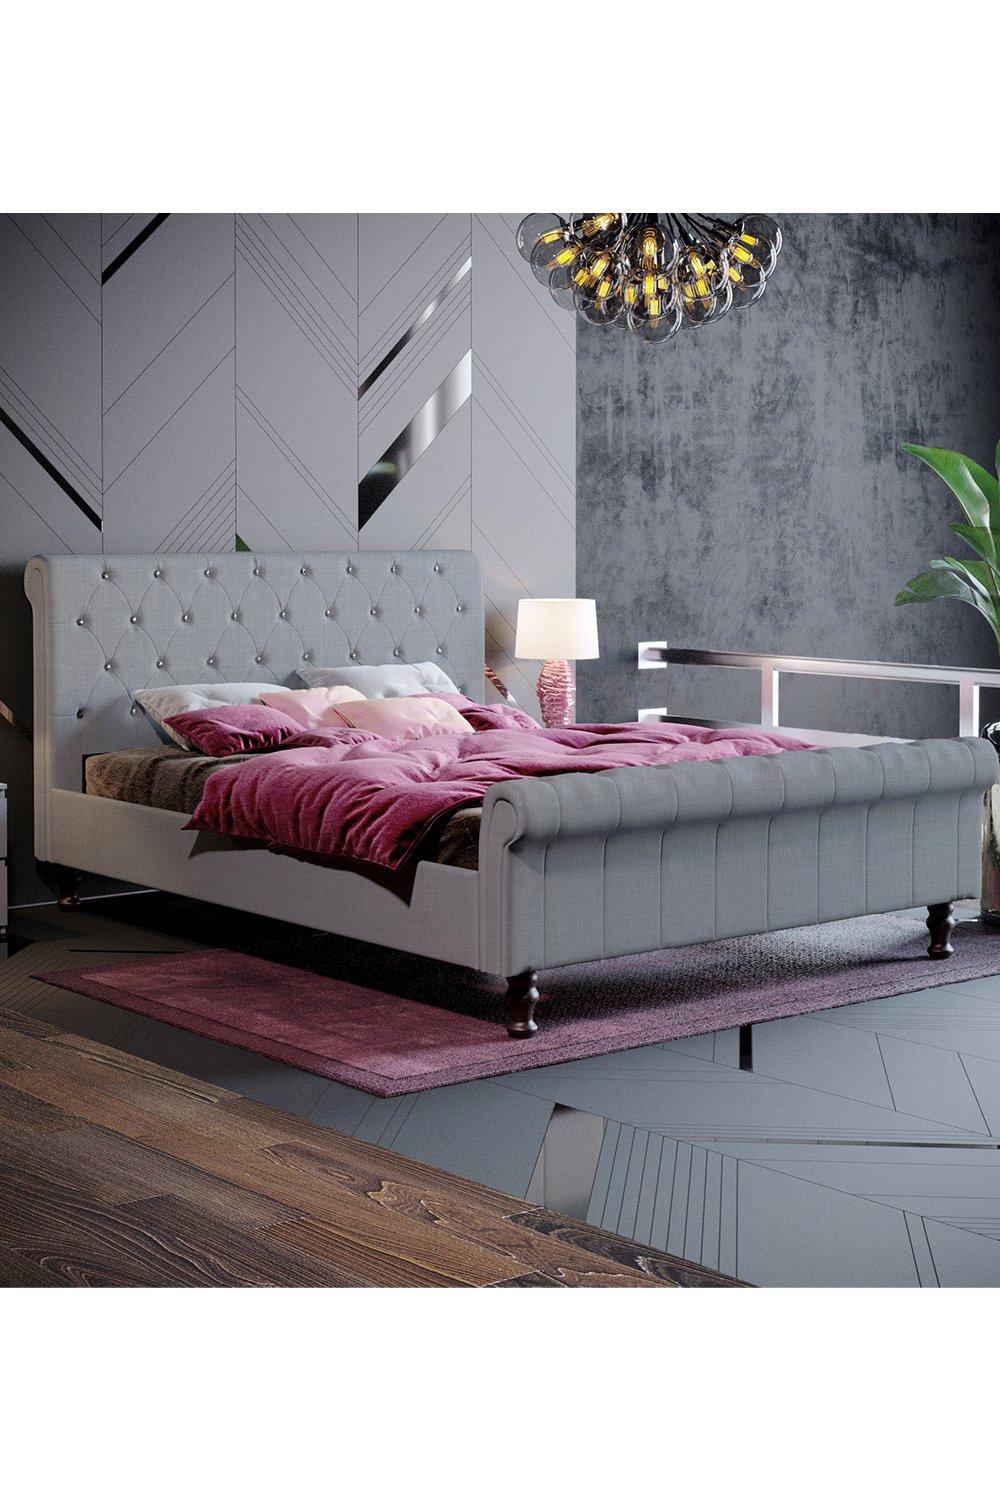 Vida Designs Violetta King Size Bed Frame Linen Fabric 1150 x 1600 x 2320 mm